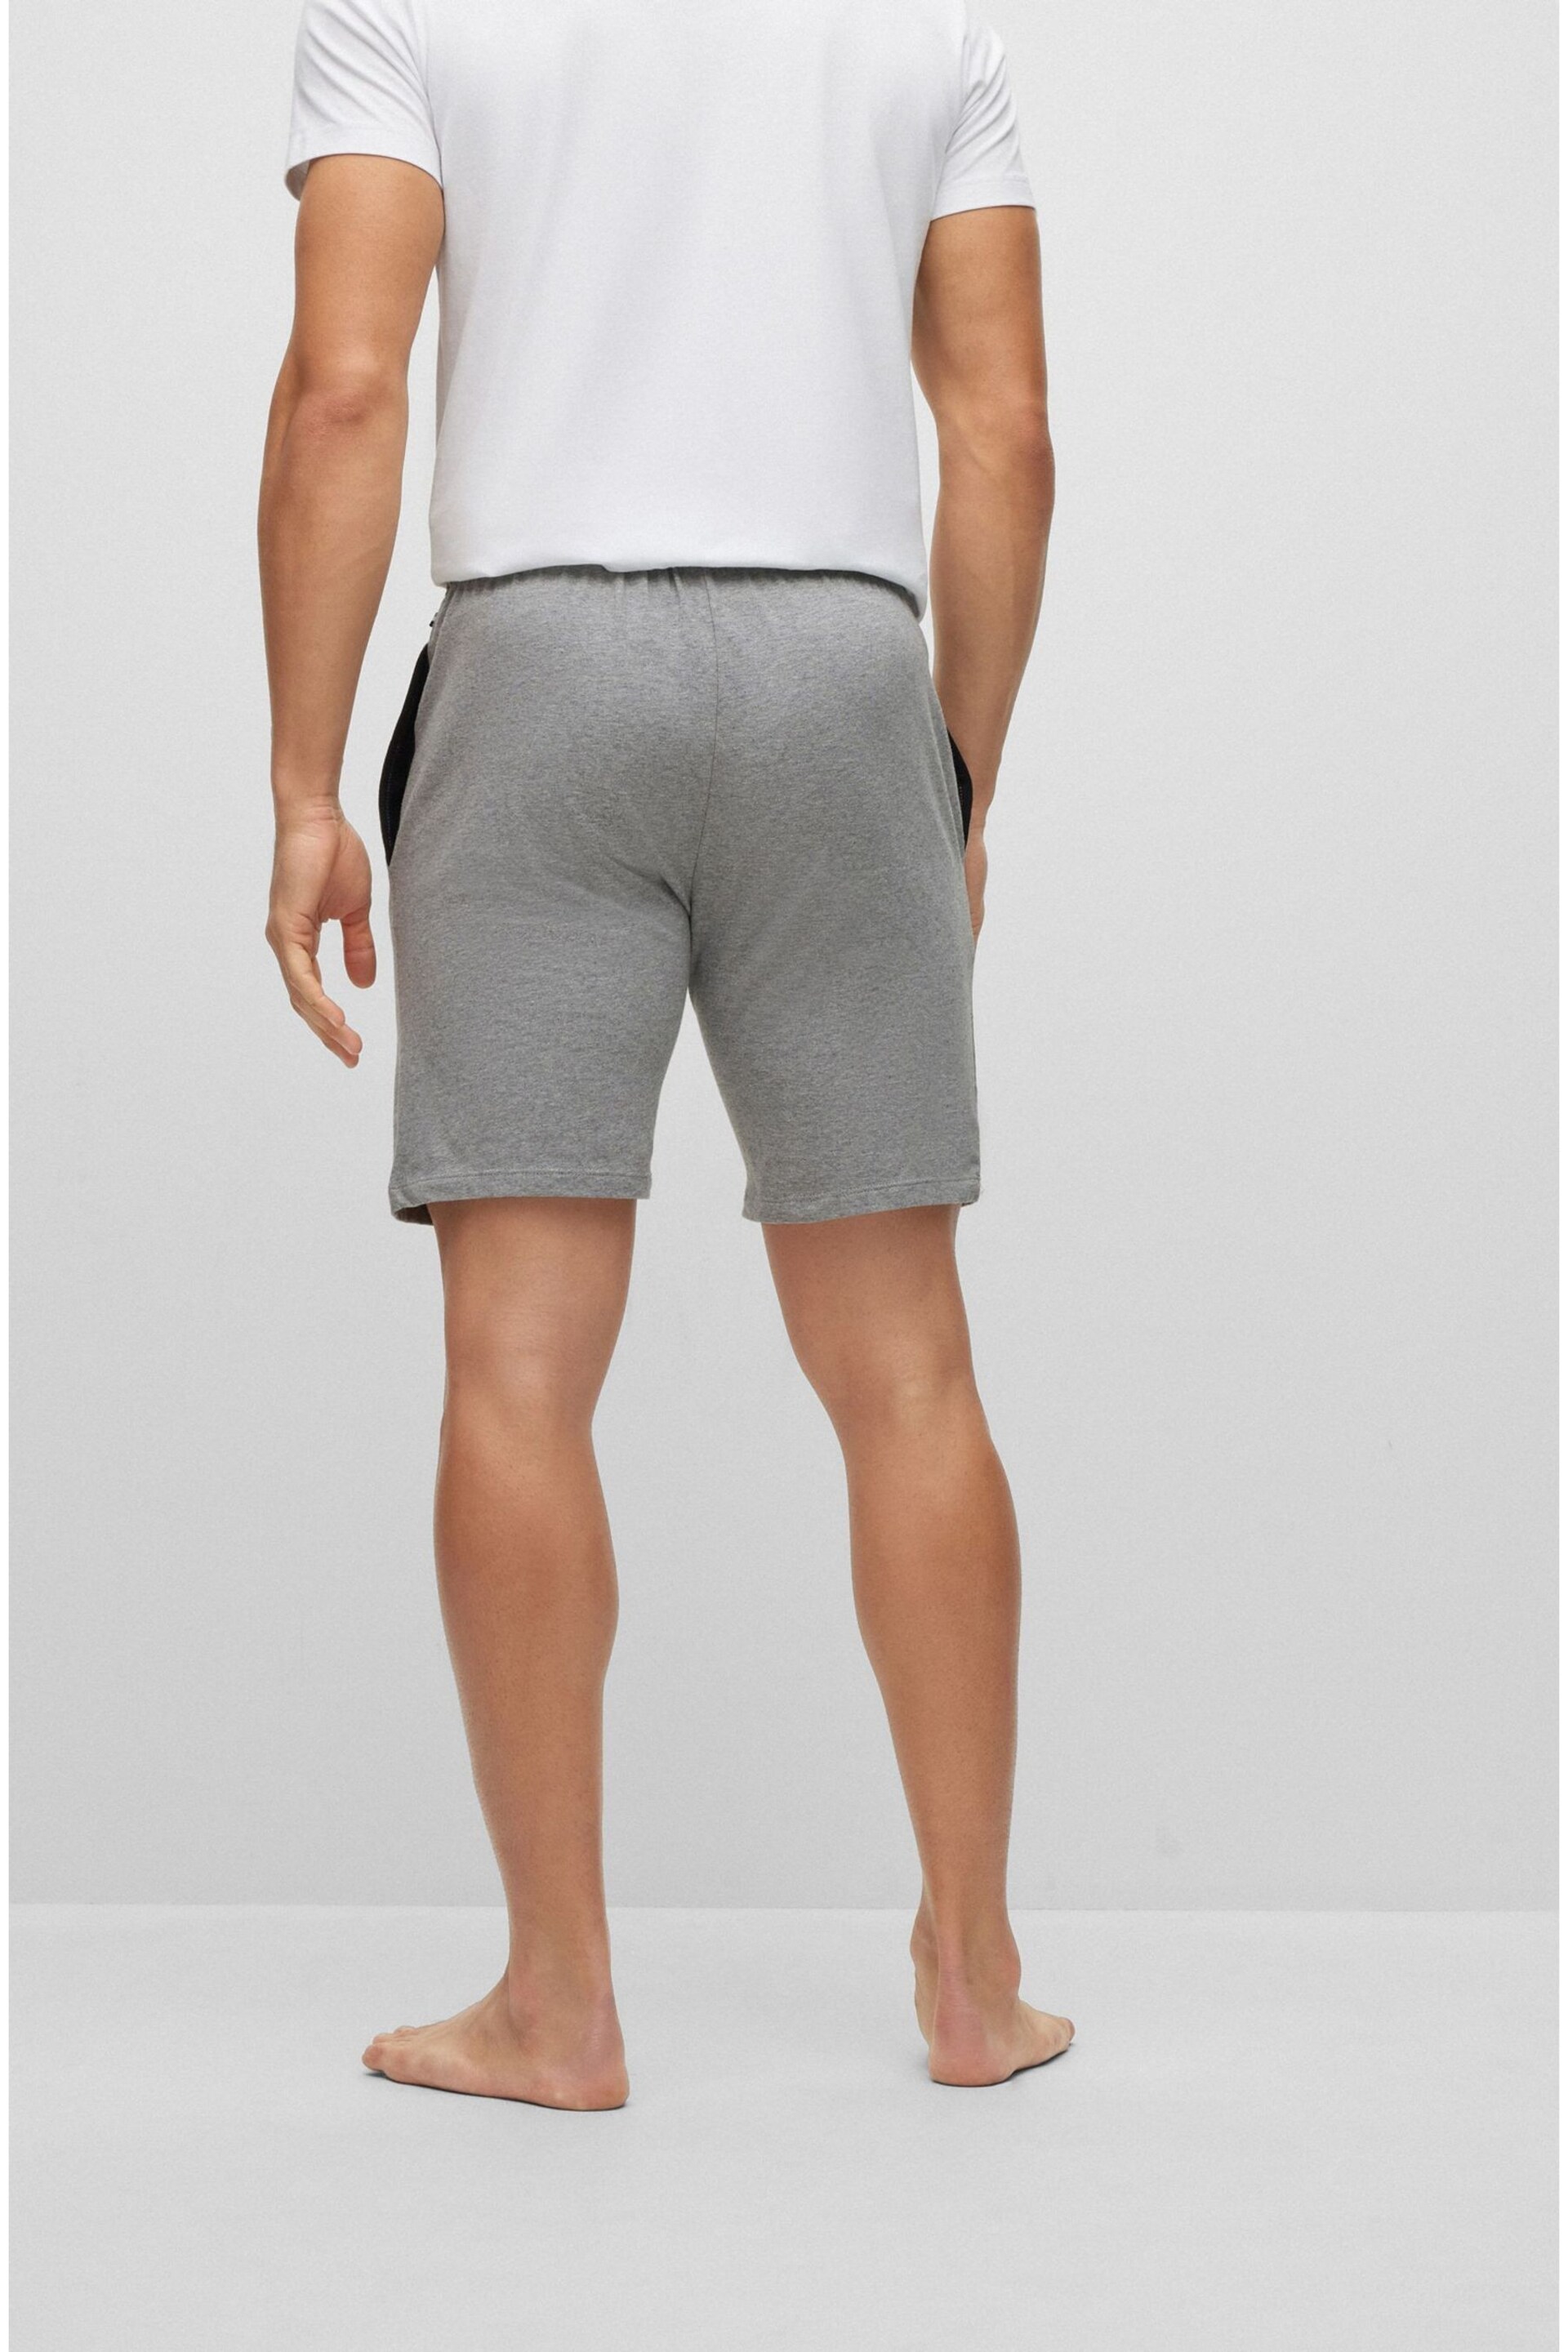 BOSS Grey Stretch Cotton Jersey Shorts - Image 2 of 5